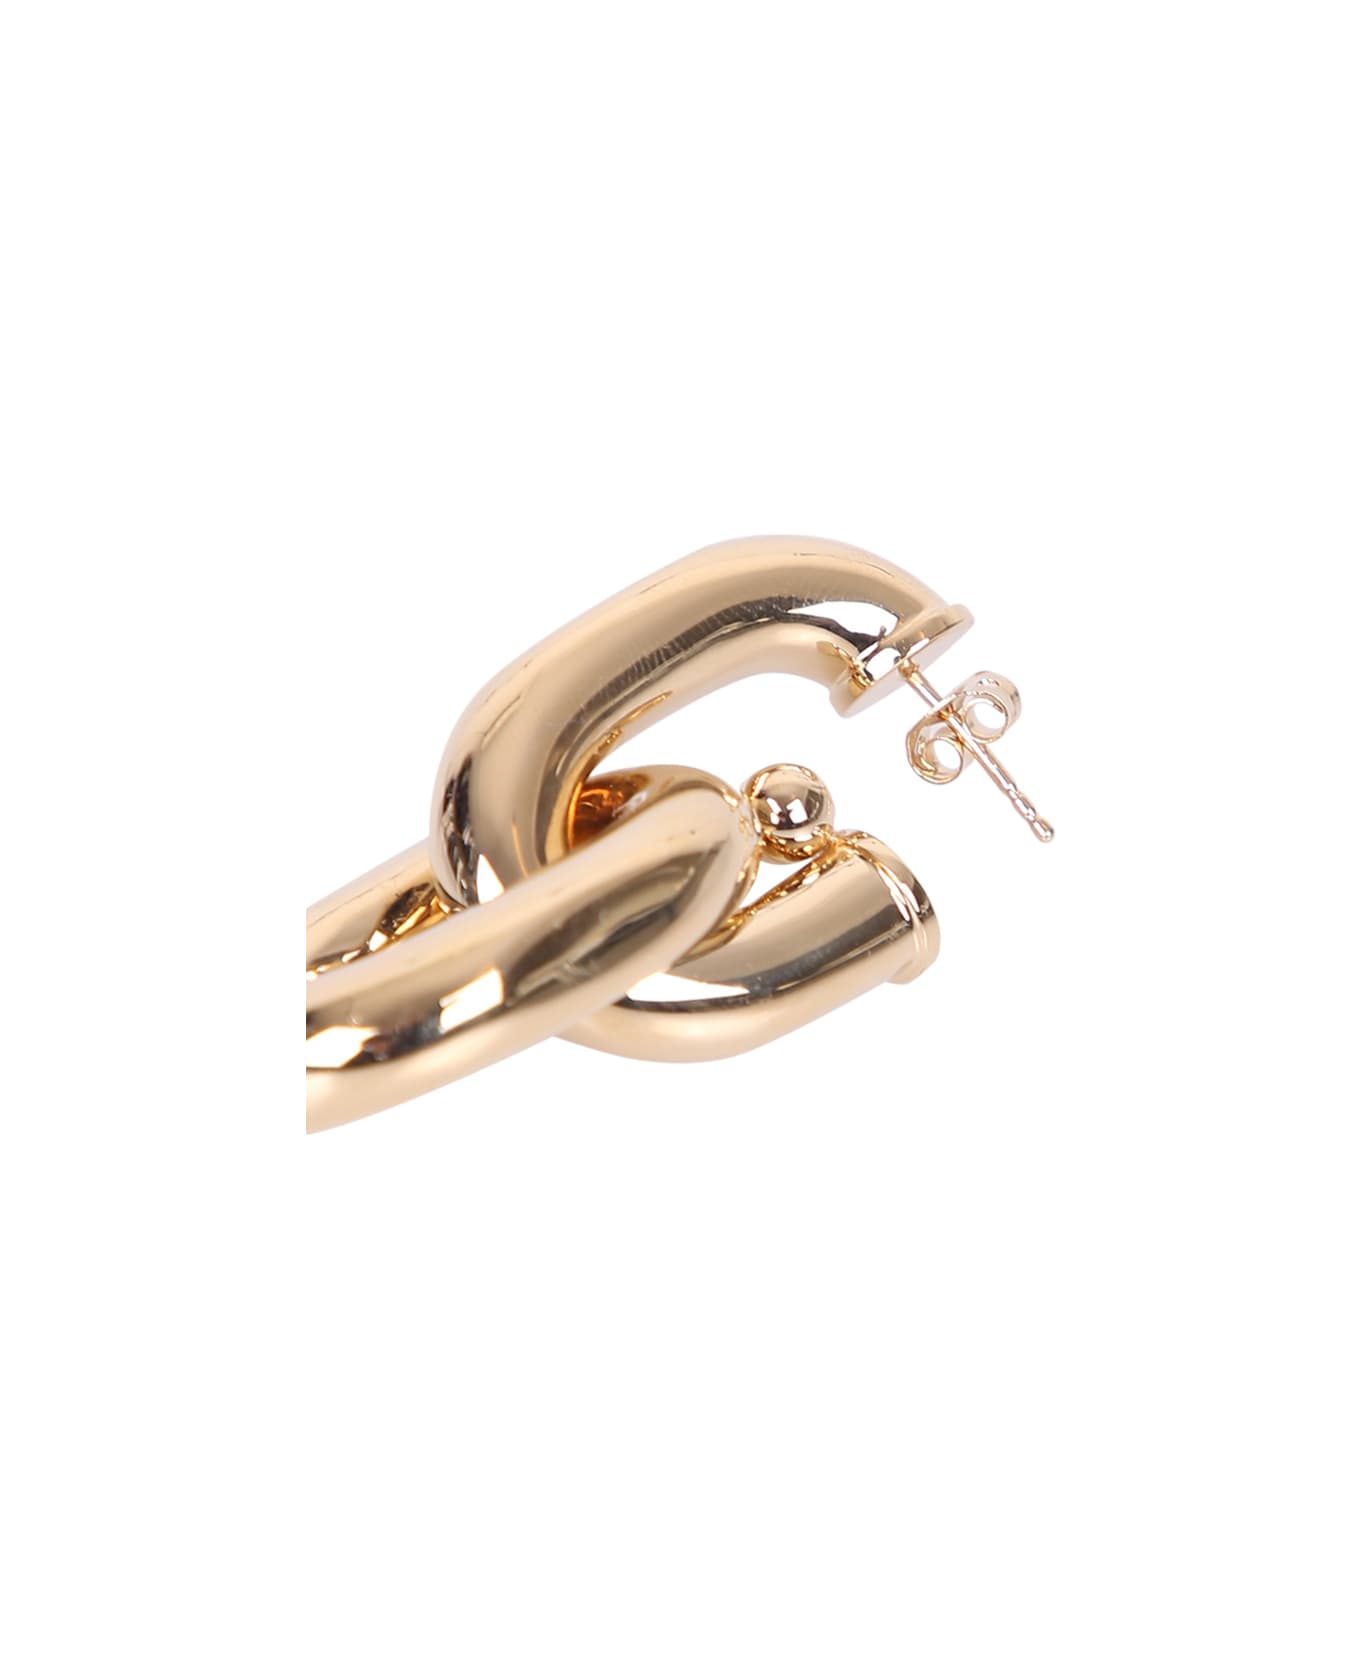 Paco Rabanne Xl Link Double Hoop Earrings - GOLD